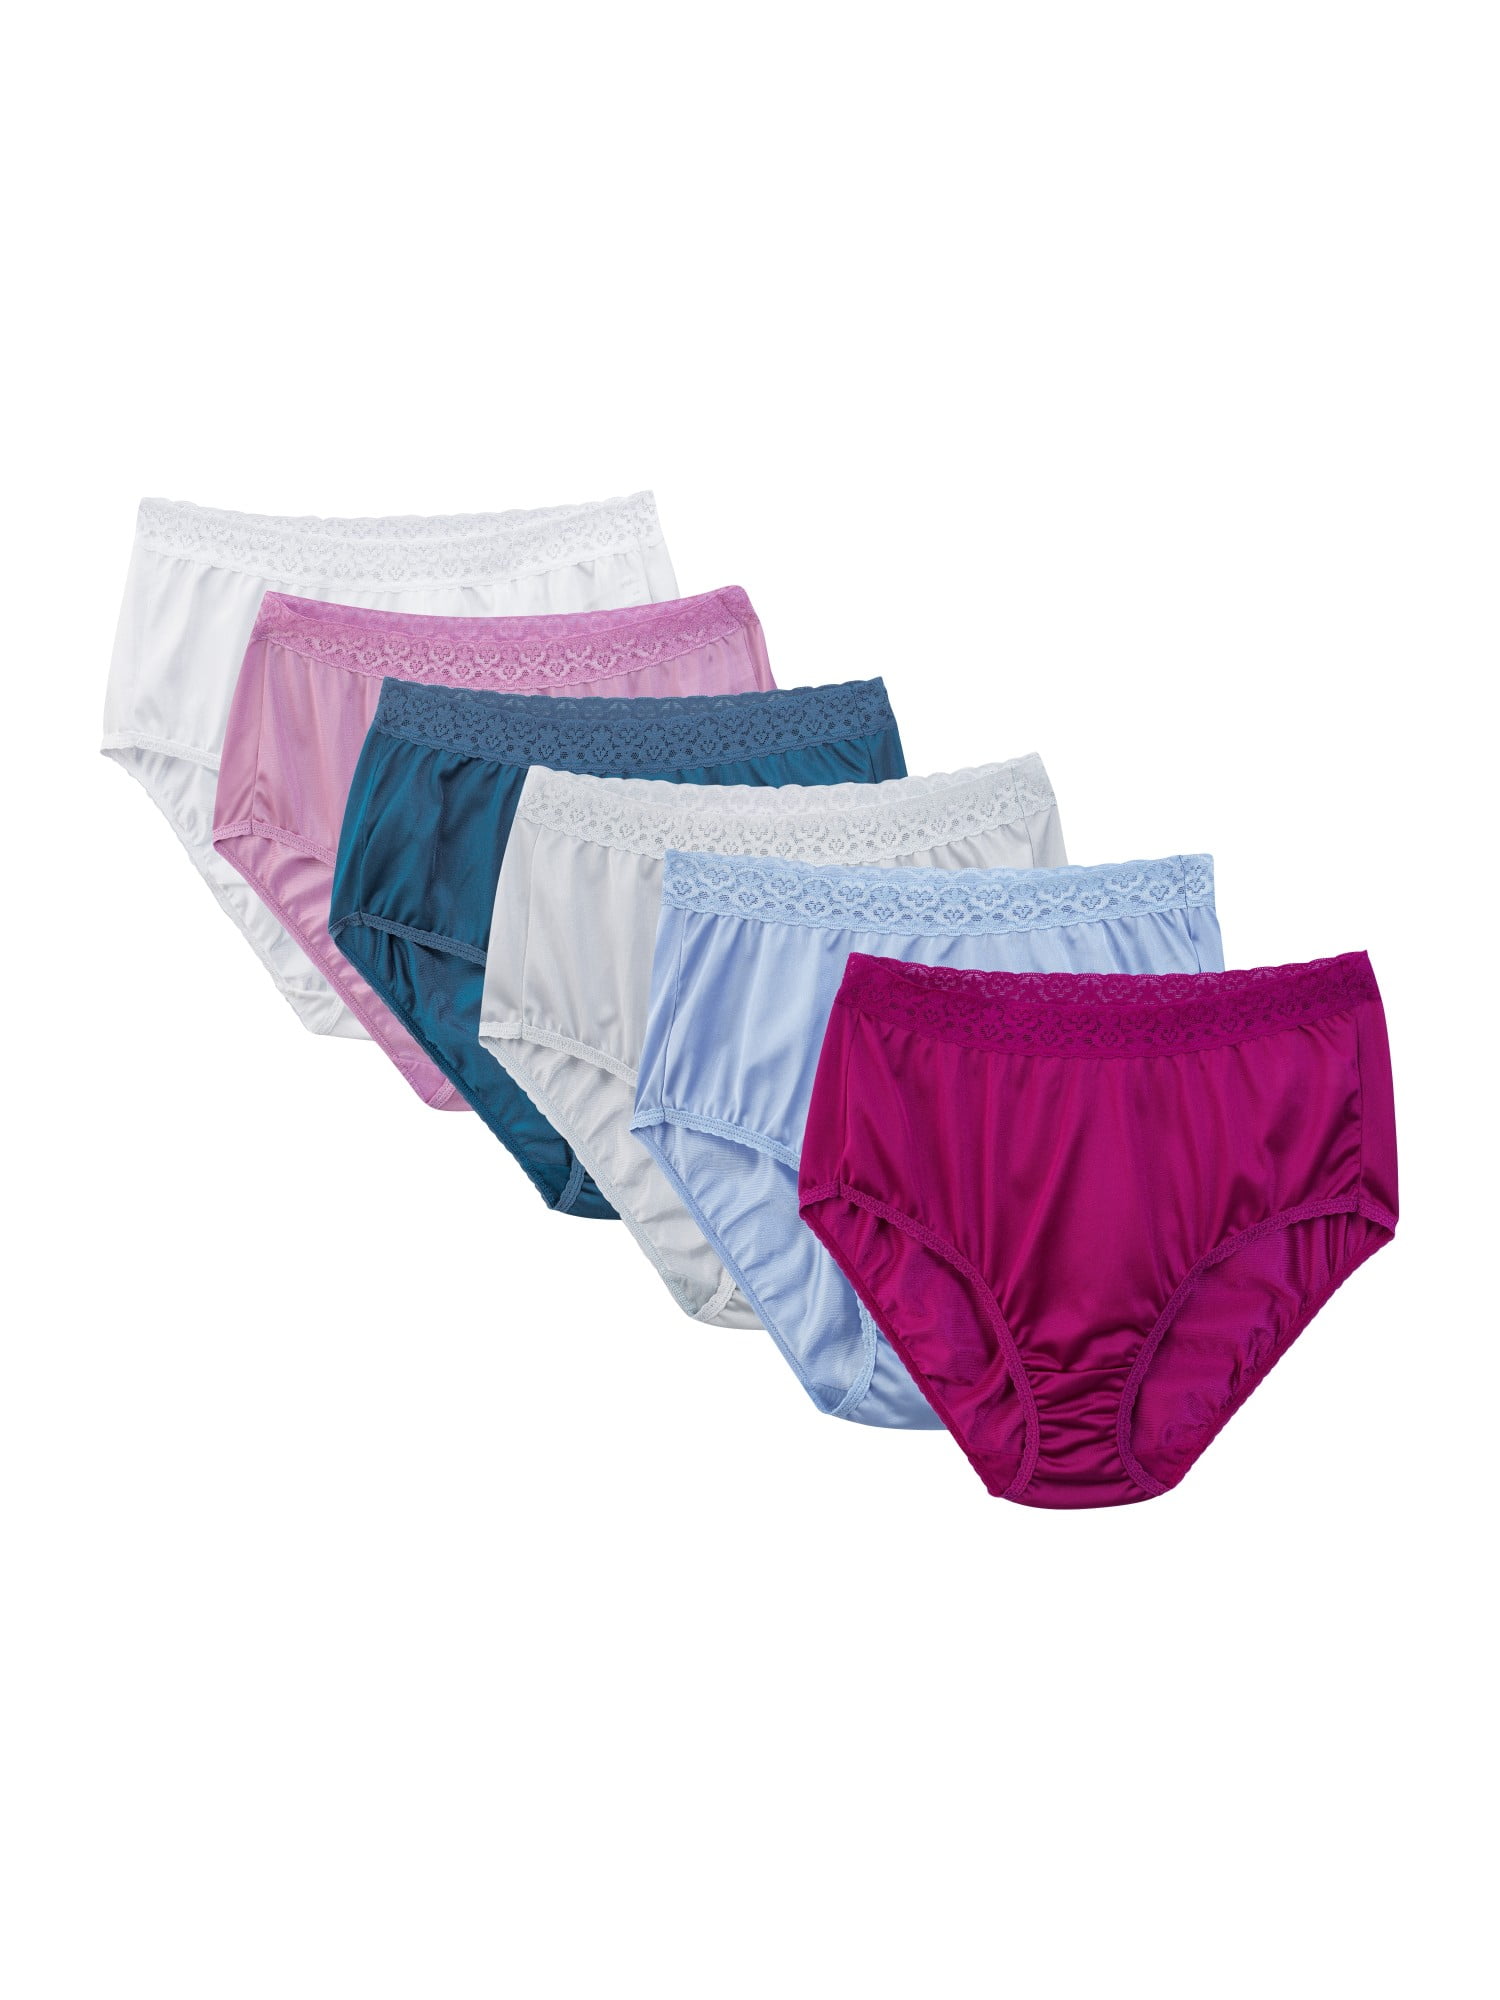 Fruit of the Loom Women's Nylon Brief Underwear, 6 Pack, Sizes 6-10 